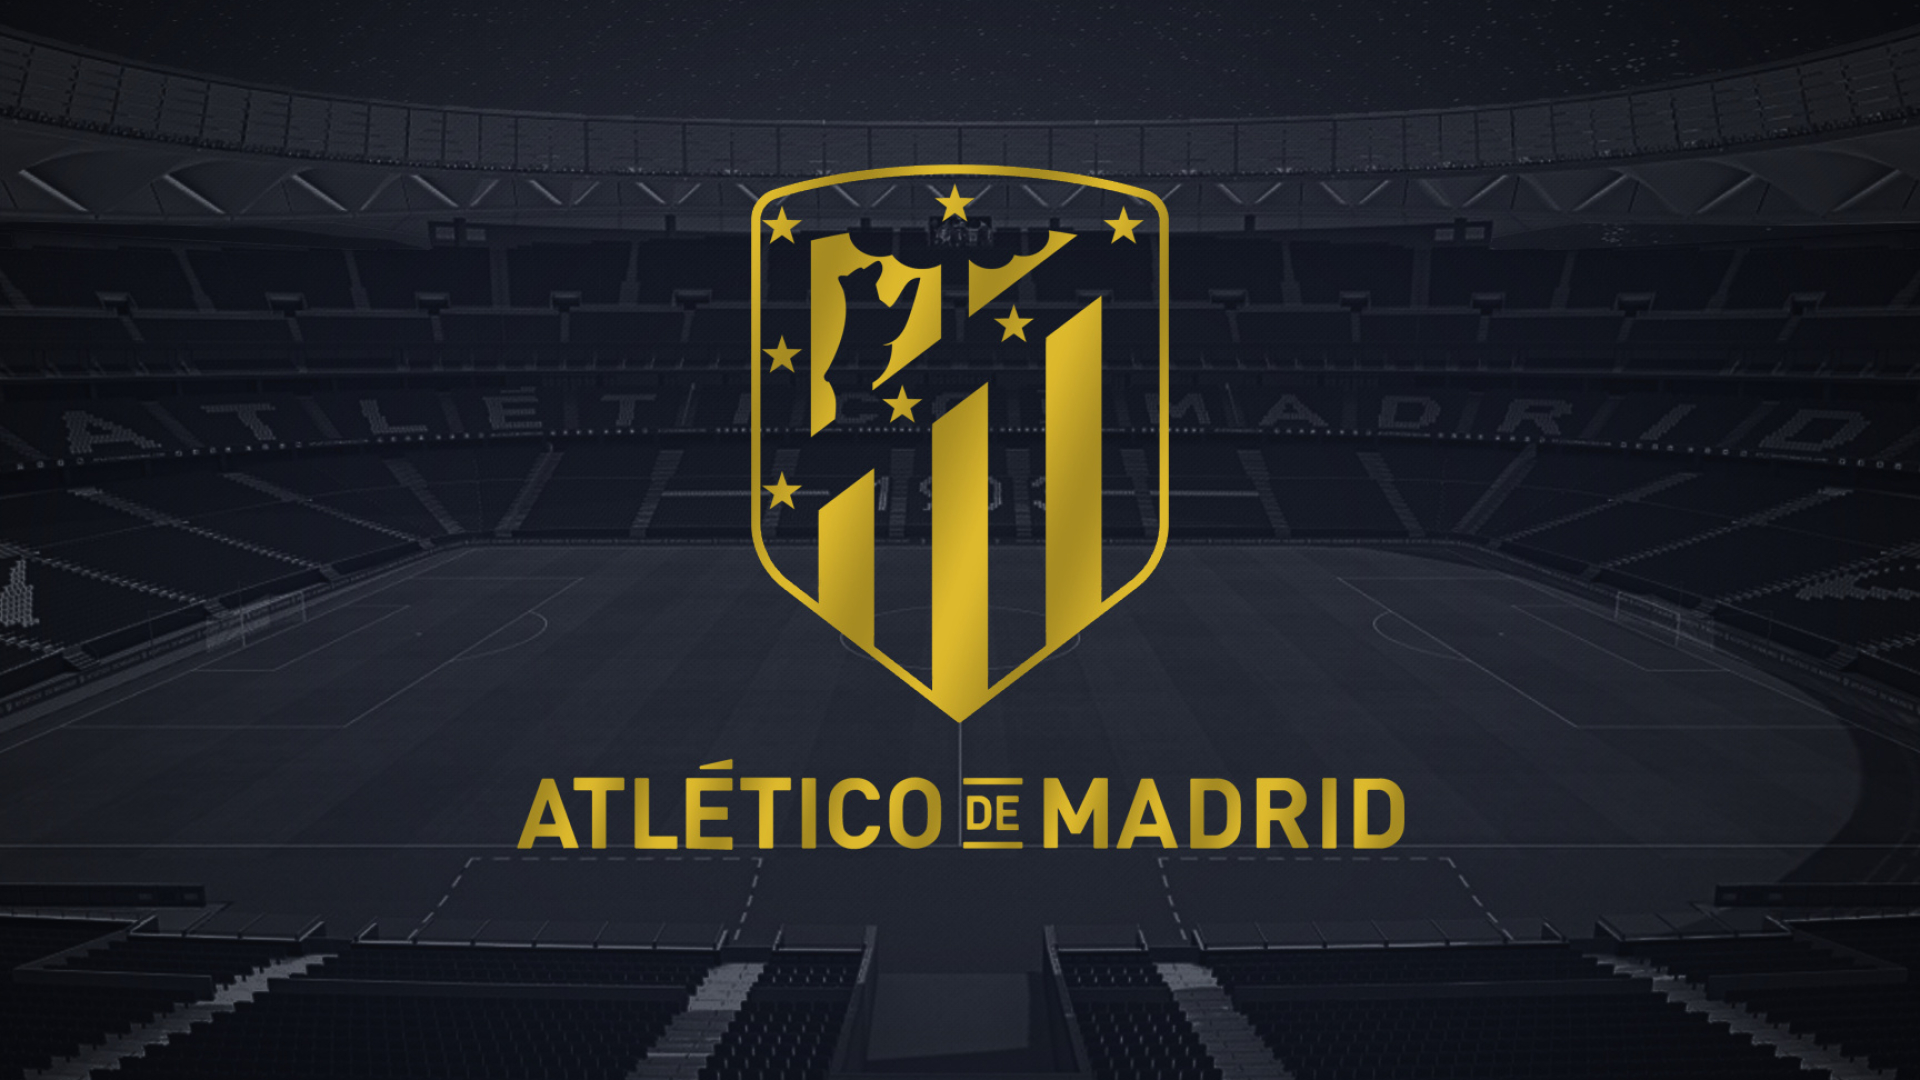 Atletico Madrid: The club won their first La Liga title in 1939-40 season. 1920x1080 Full HD Wallpaper.